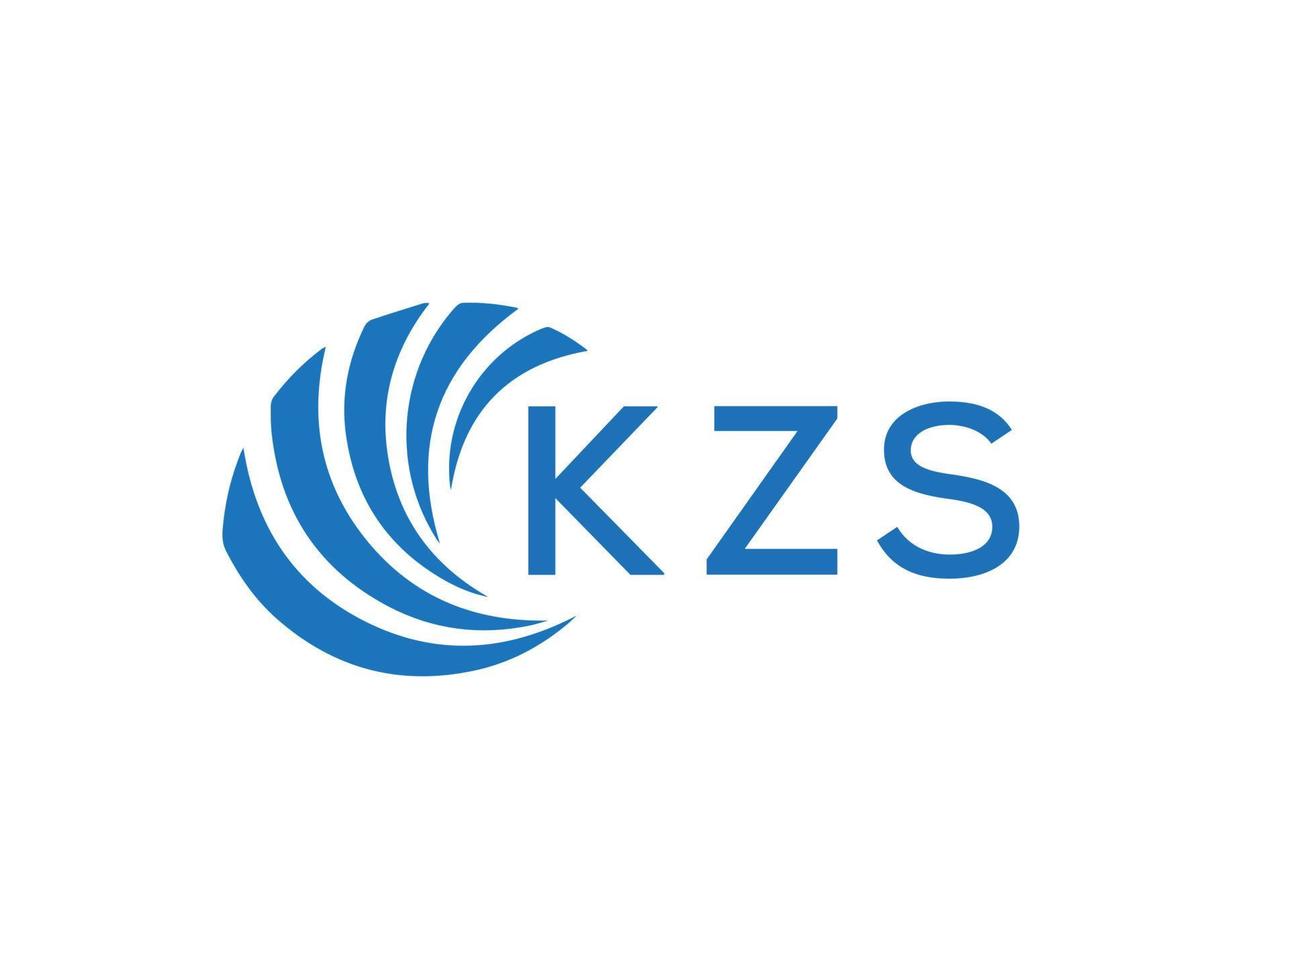 kzs resumen negocio crecimiento logo diseño en blanco antecedentes. kzs creativo iniciales letra logo concepto. vector